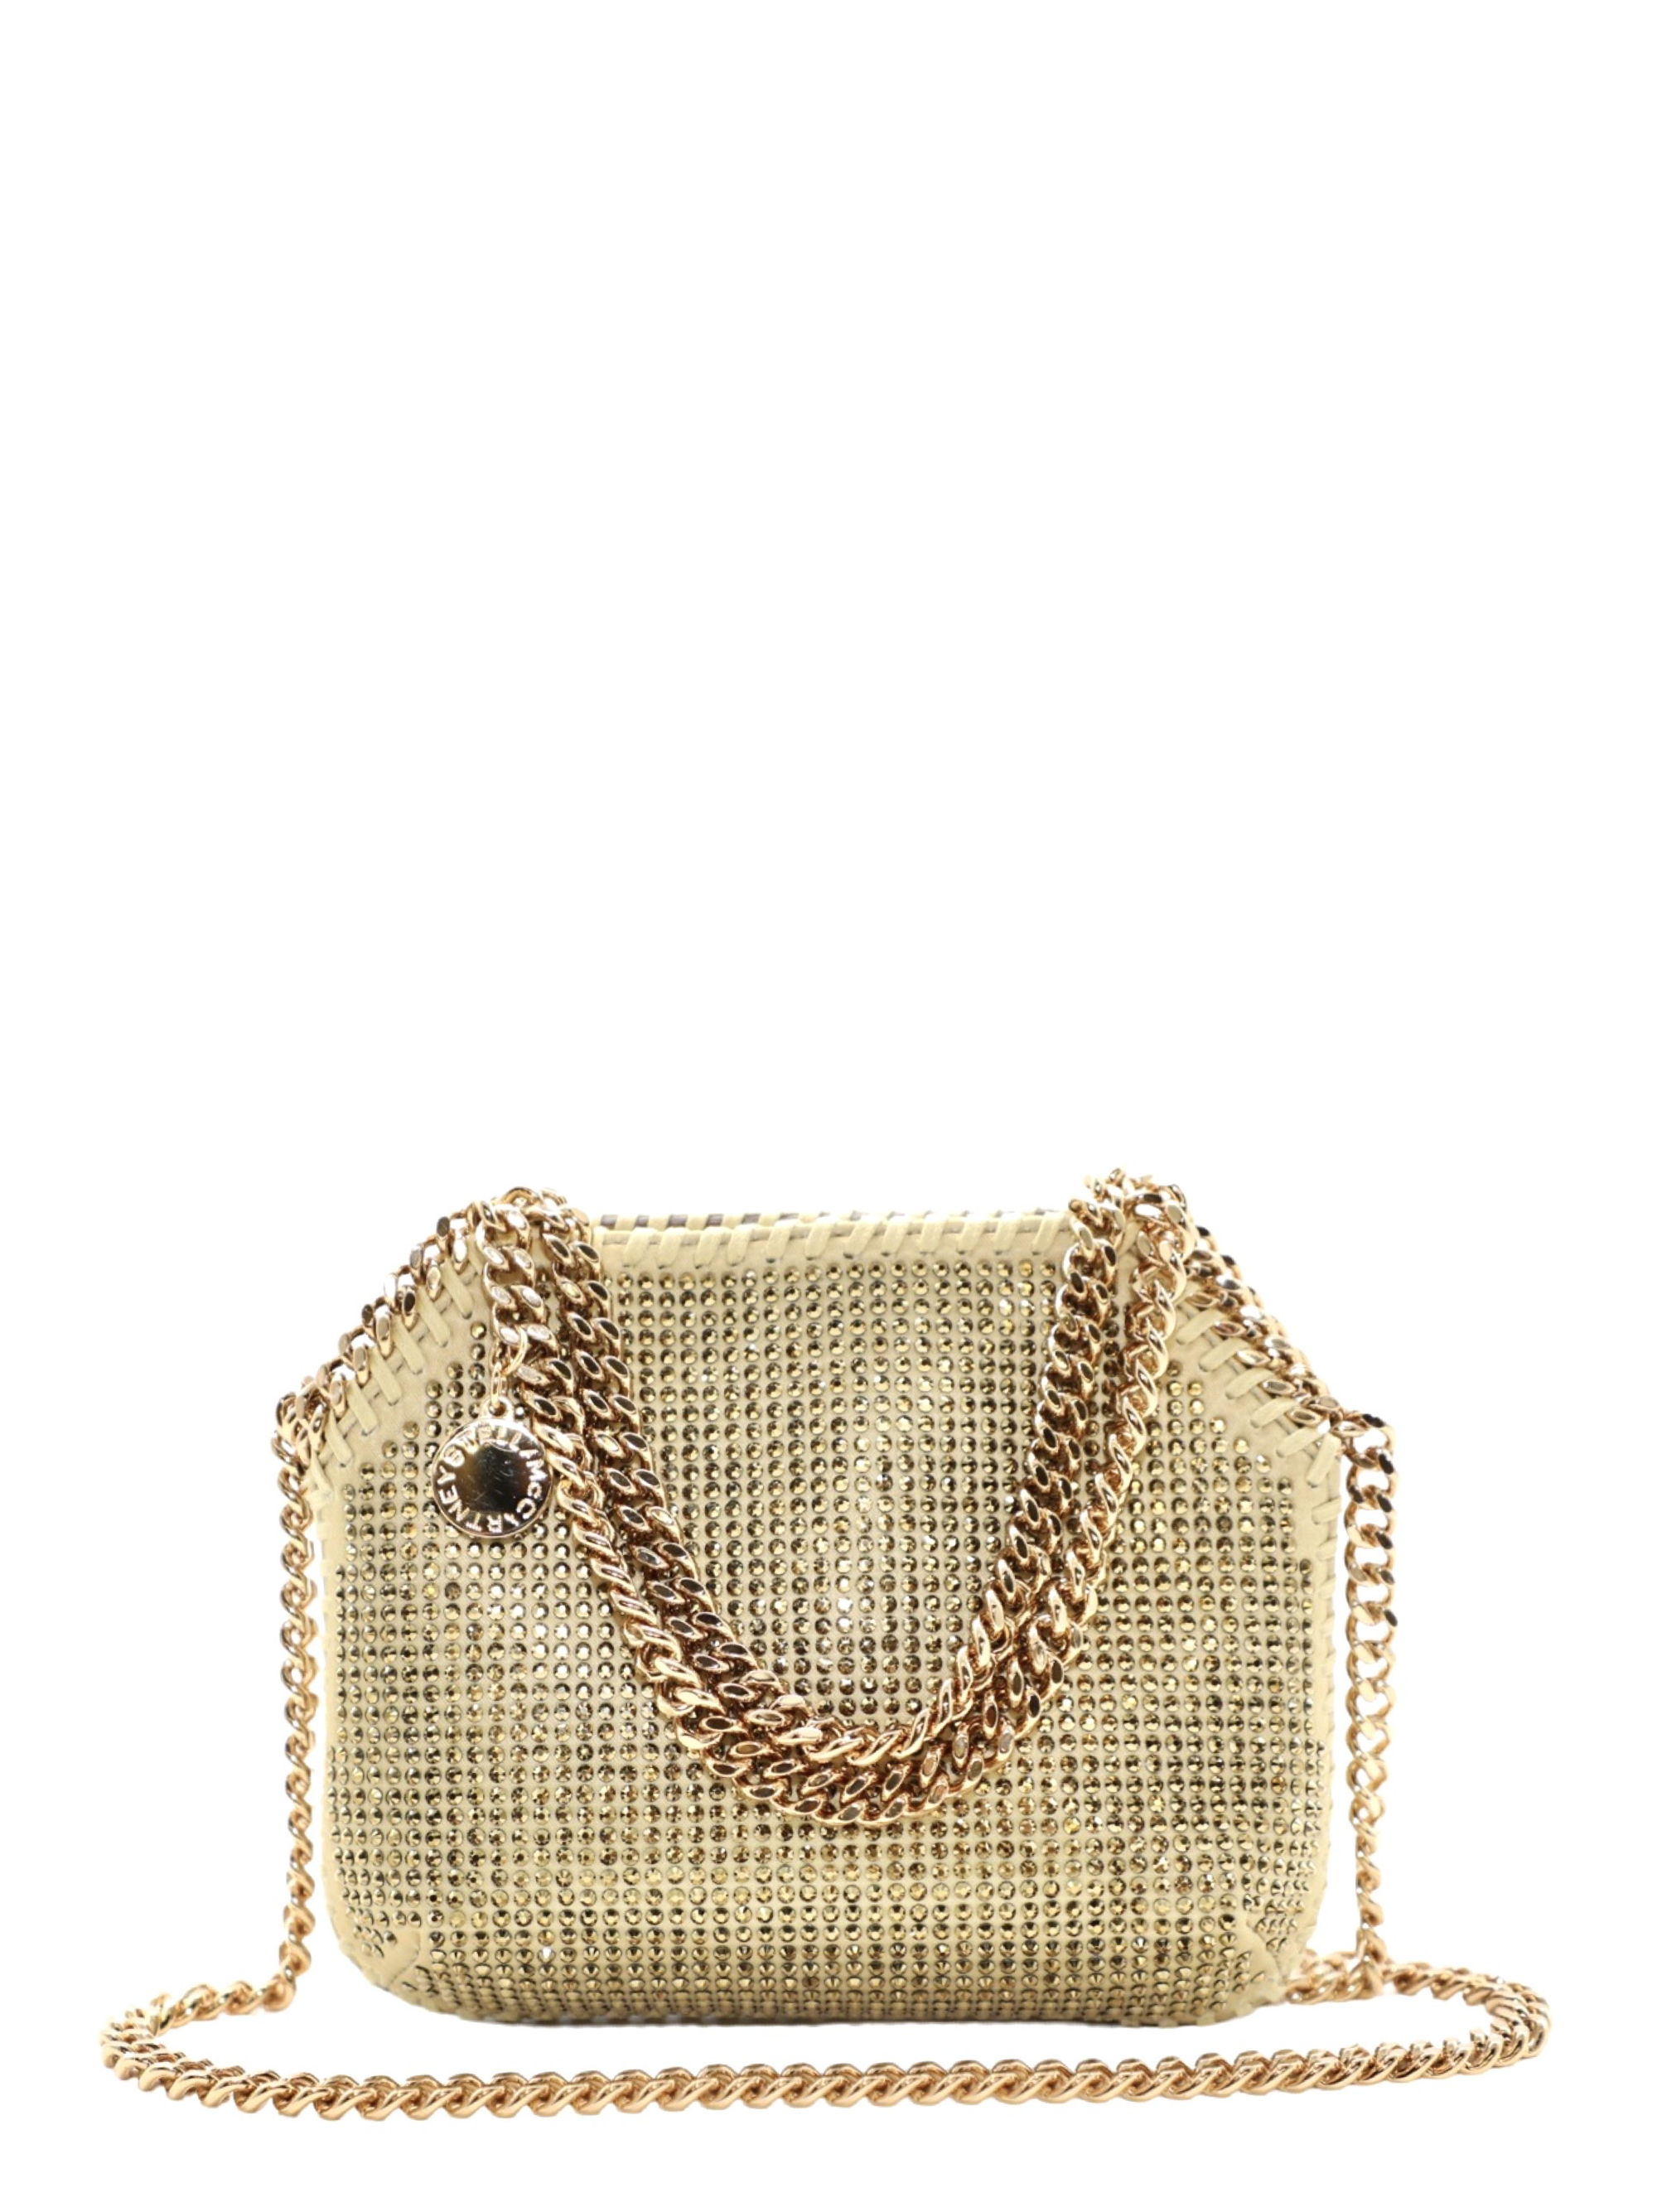 STELLA MCCARTNEY: mini bag for woman - Grey | Stella Mccartney mini bag  7B0058W9132 online at GIGLIO.COM